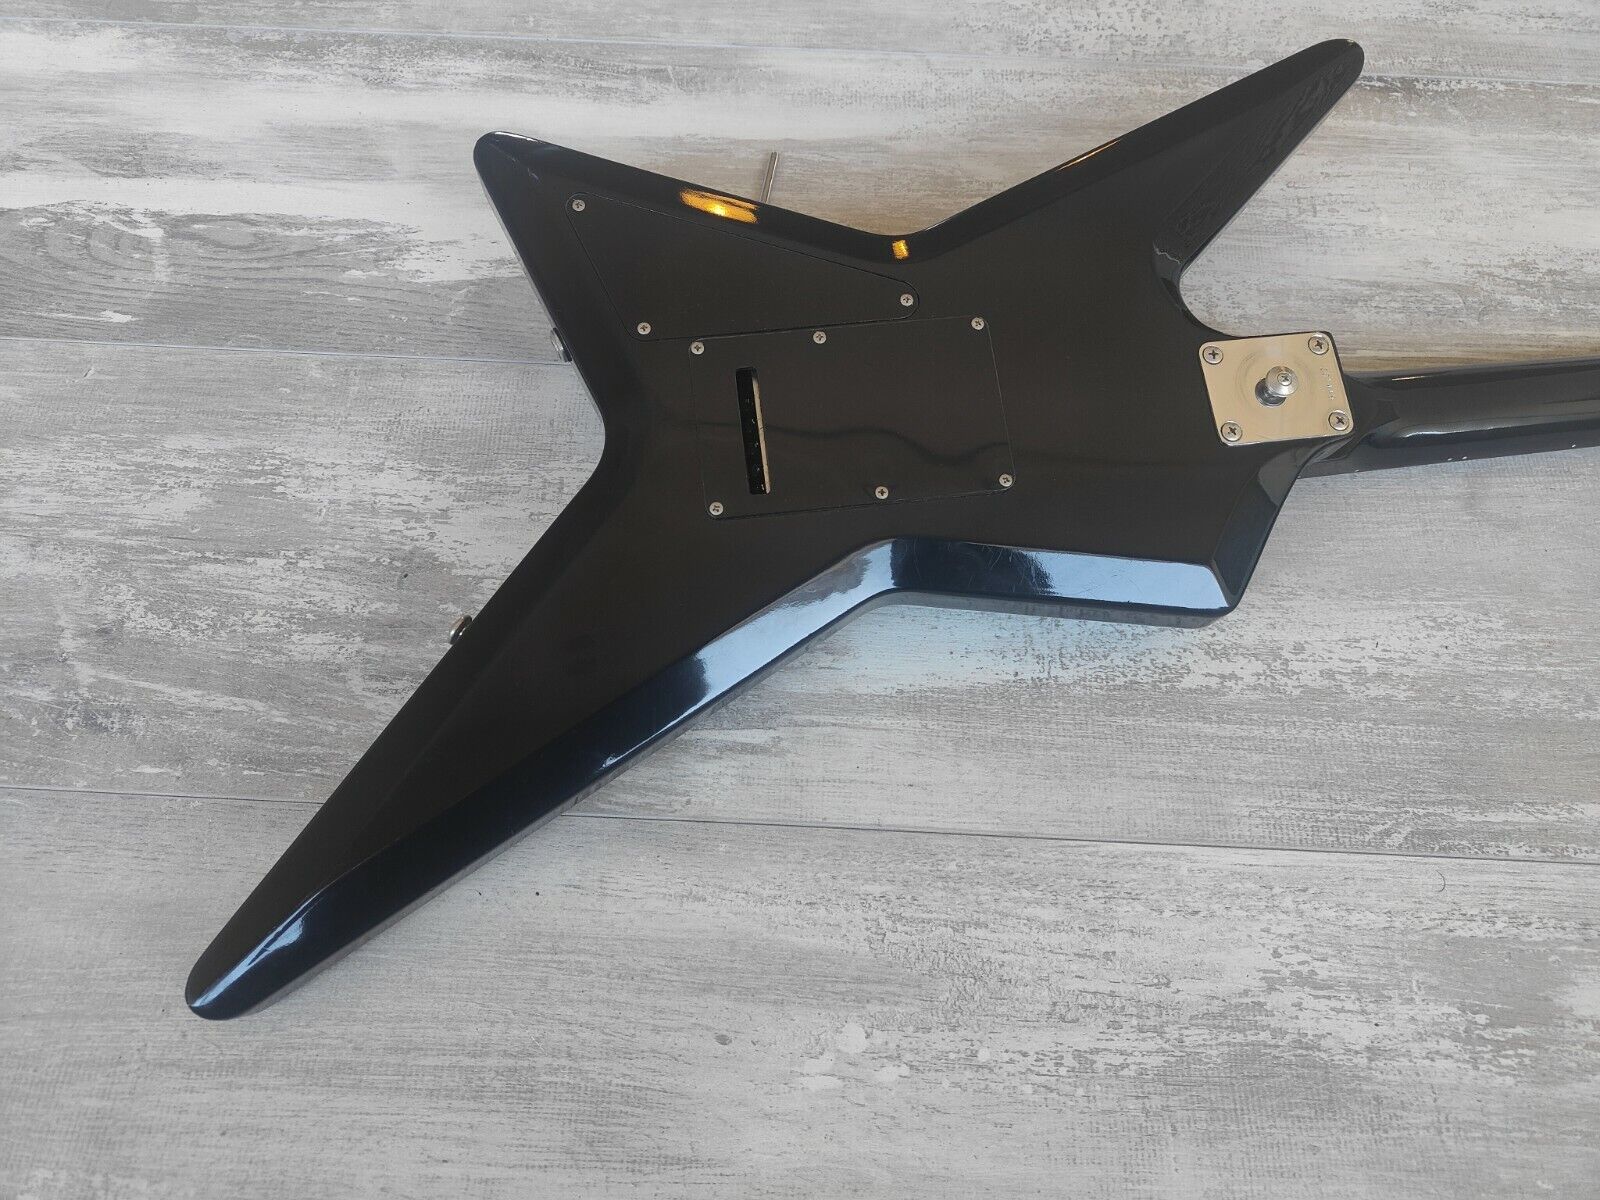 1986 Tokai Japan F-55 Star Guitar (Black)